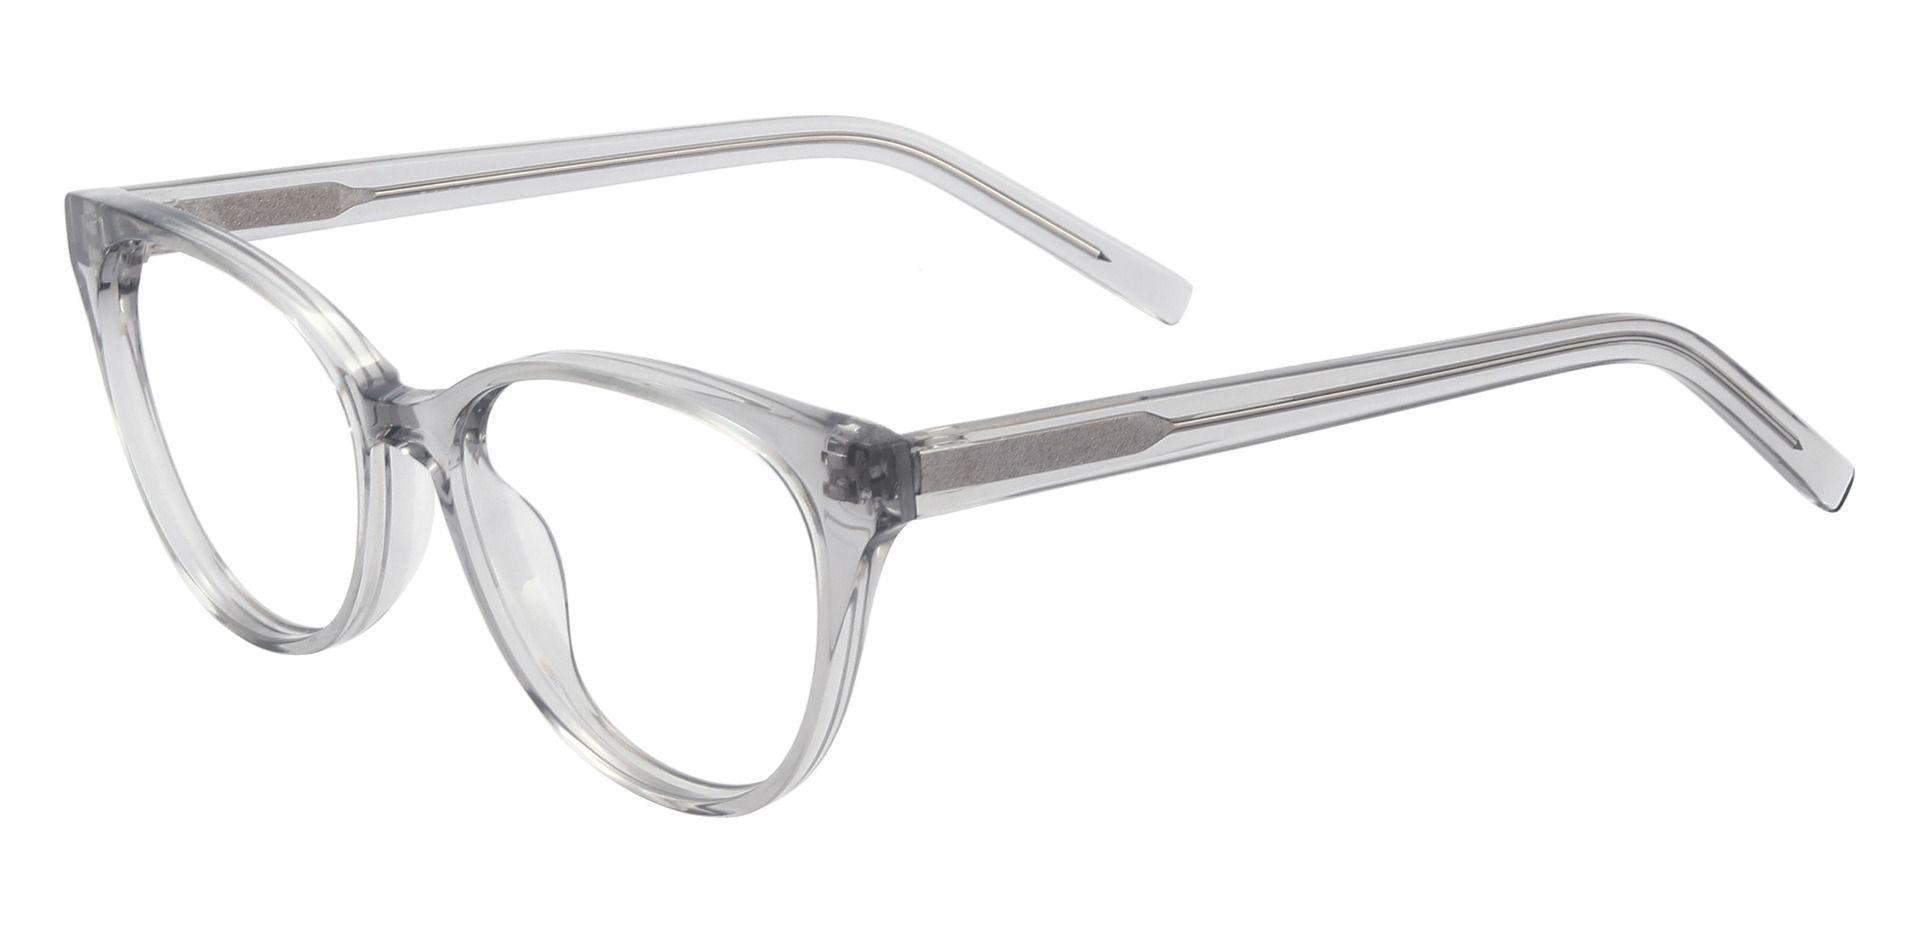 Carthage Oval Prescription Glasses - Clear